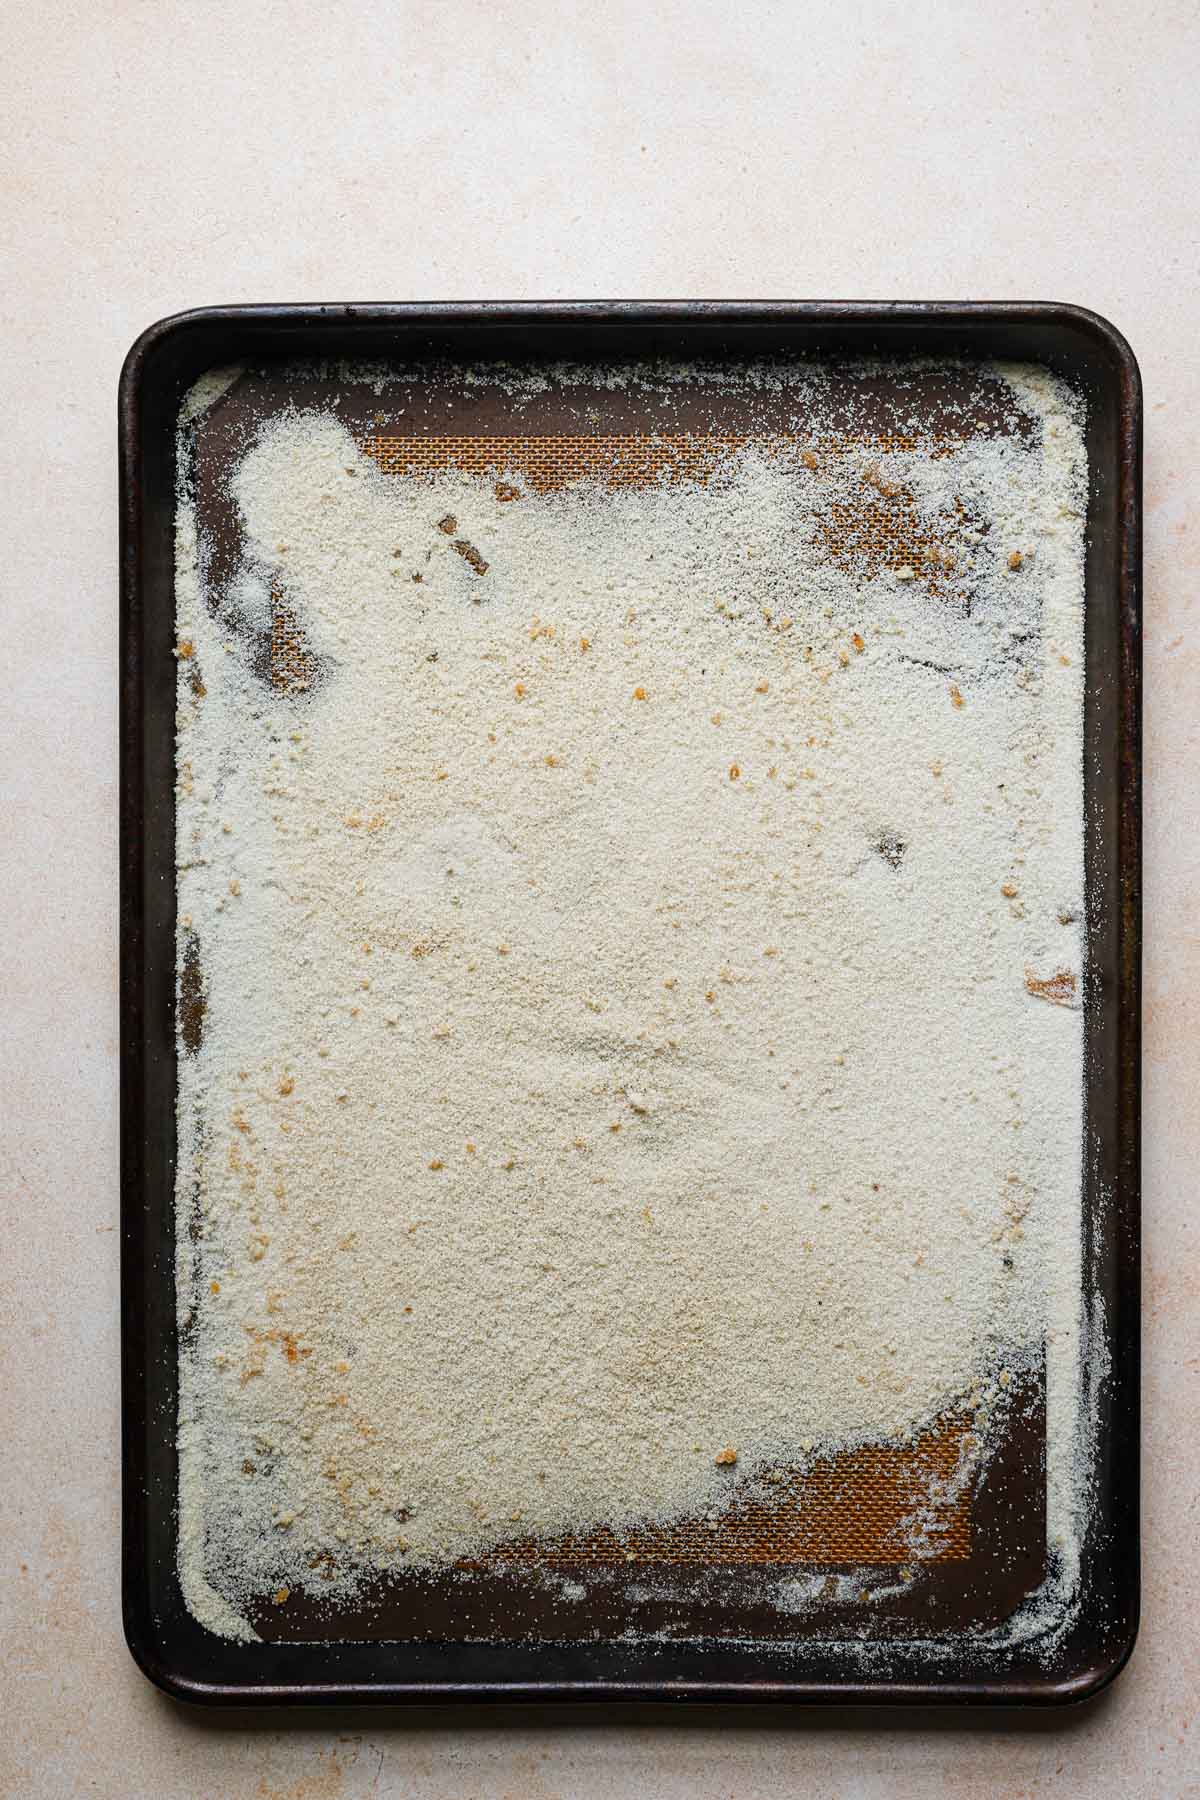 Lightly caramelized sugar on a baking tray